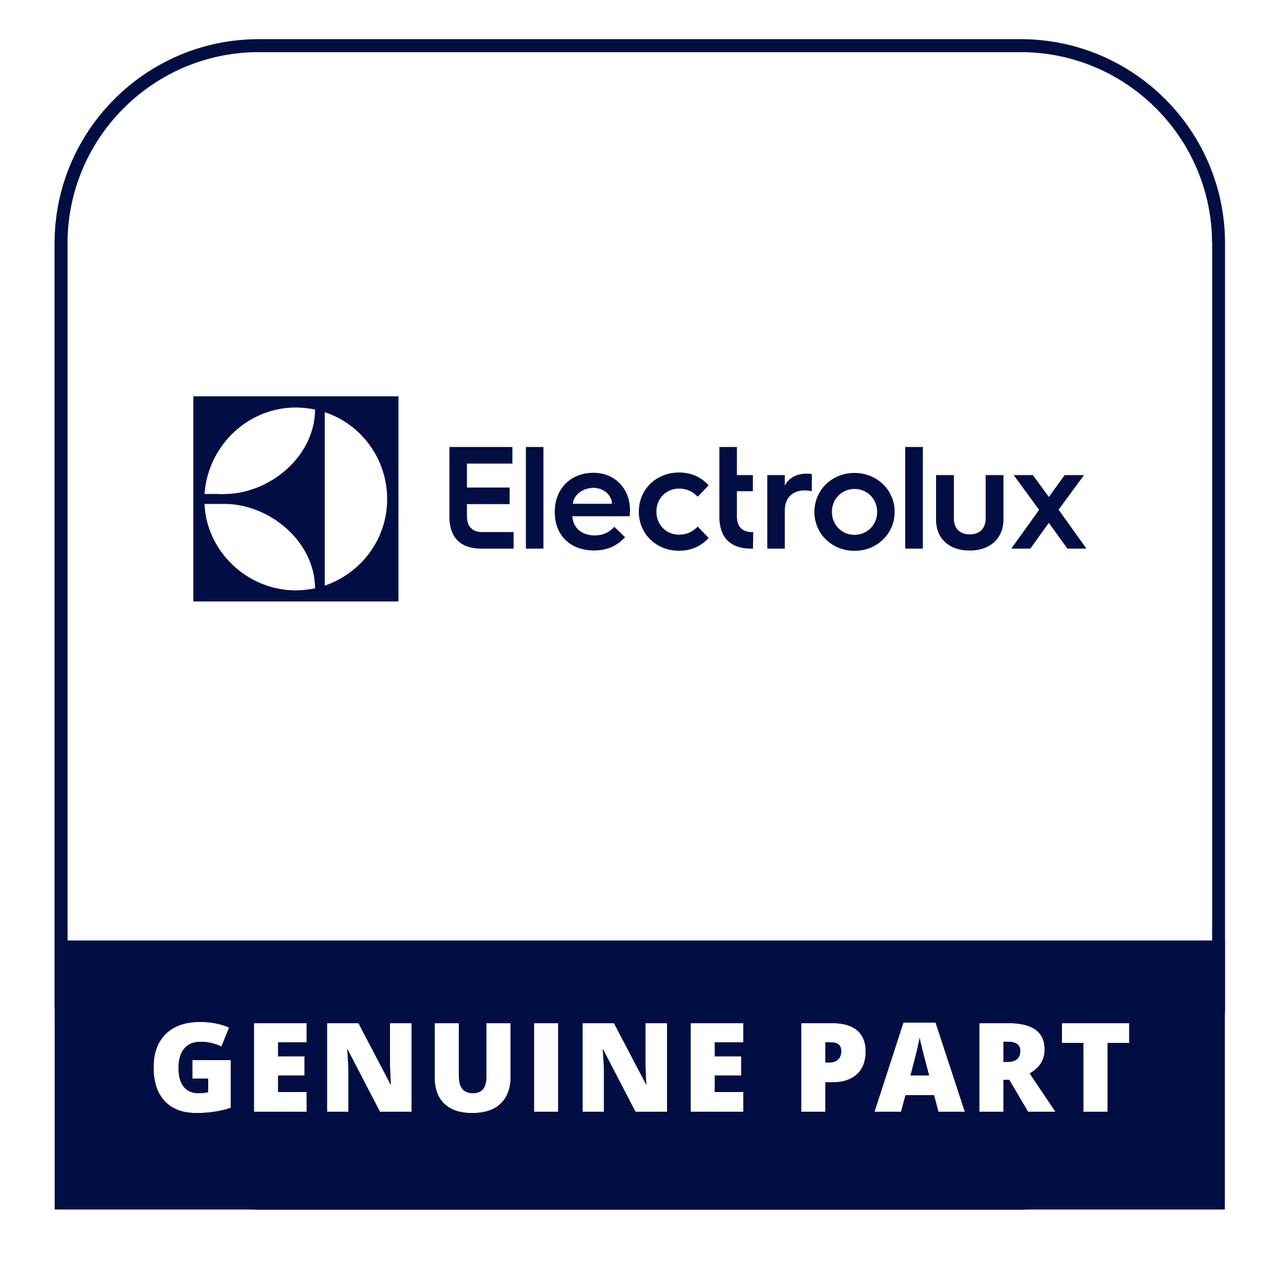 Frigidaire - Electrolux 5304478953 Label - Genuine Electrolux Part